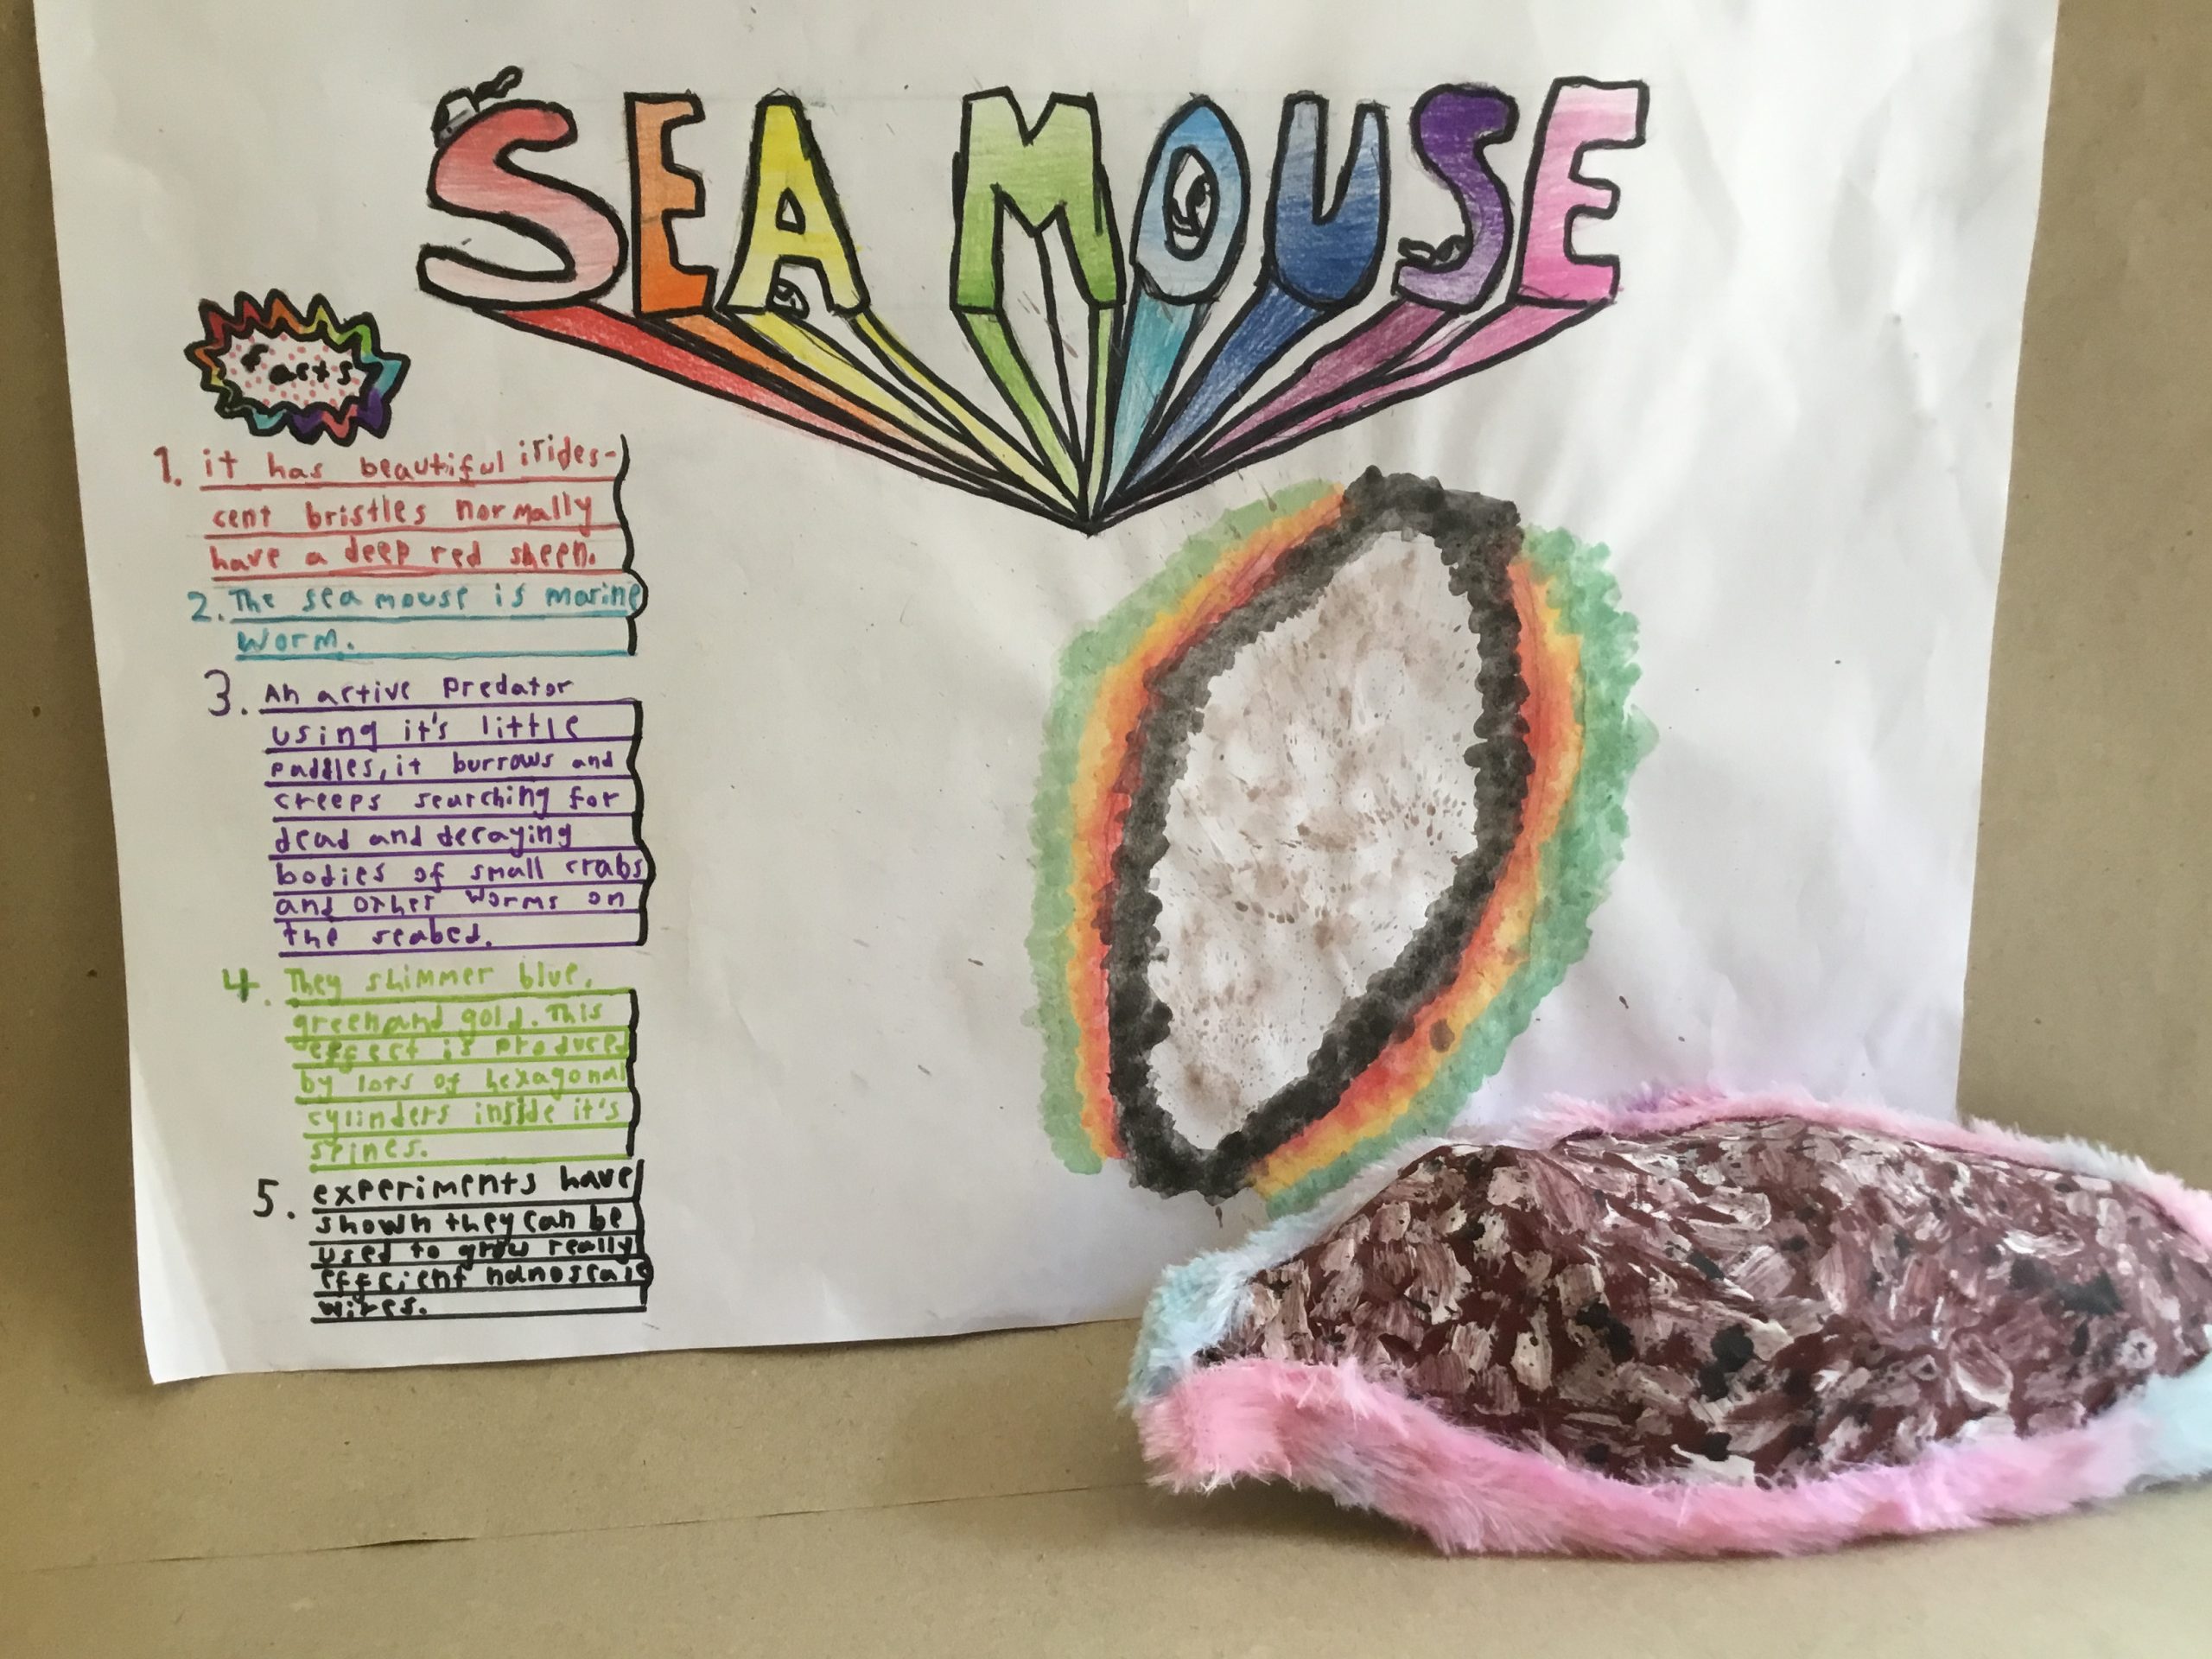 Sea mouse by Noa EMAS